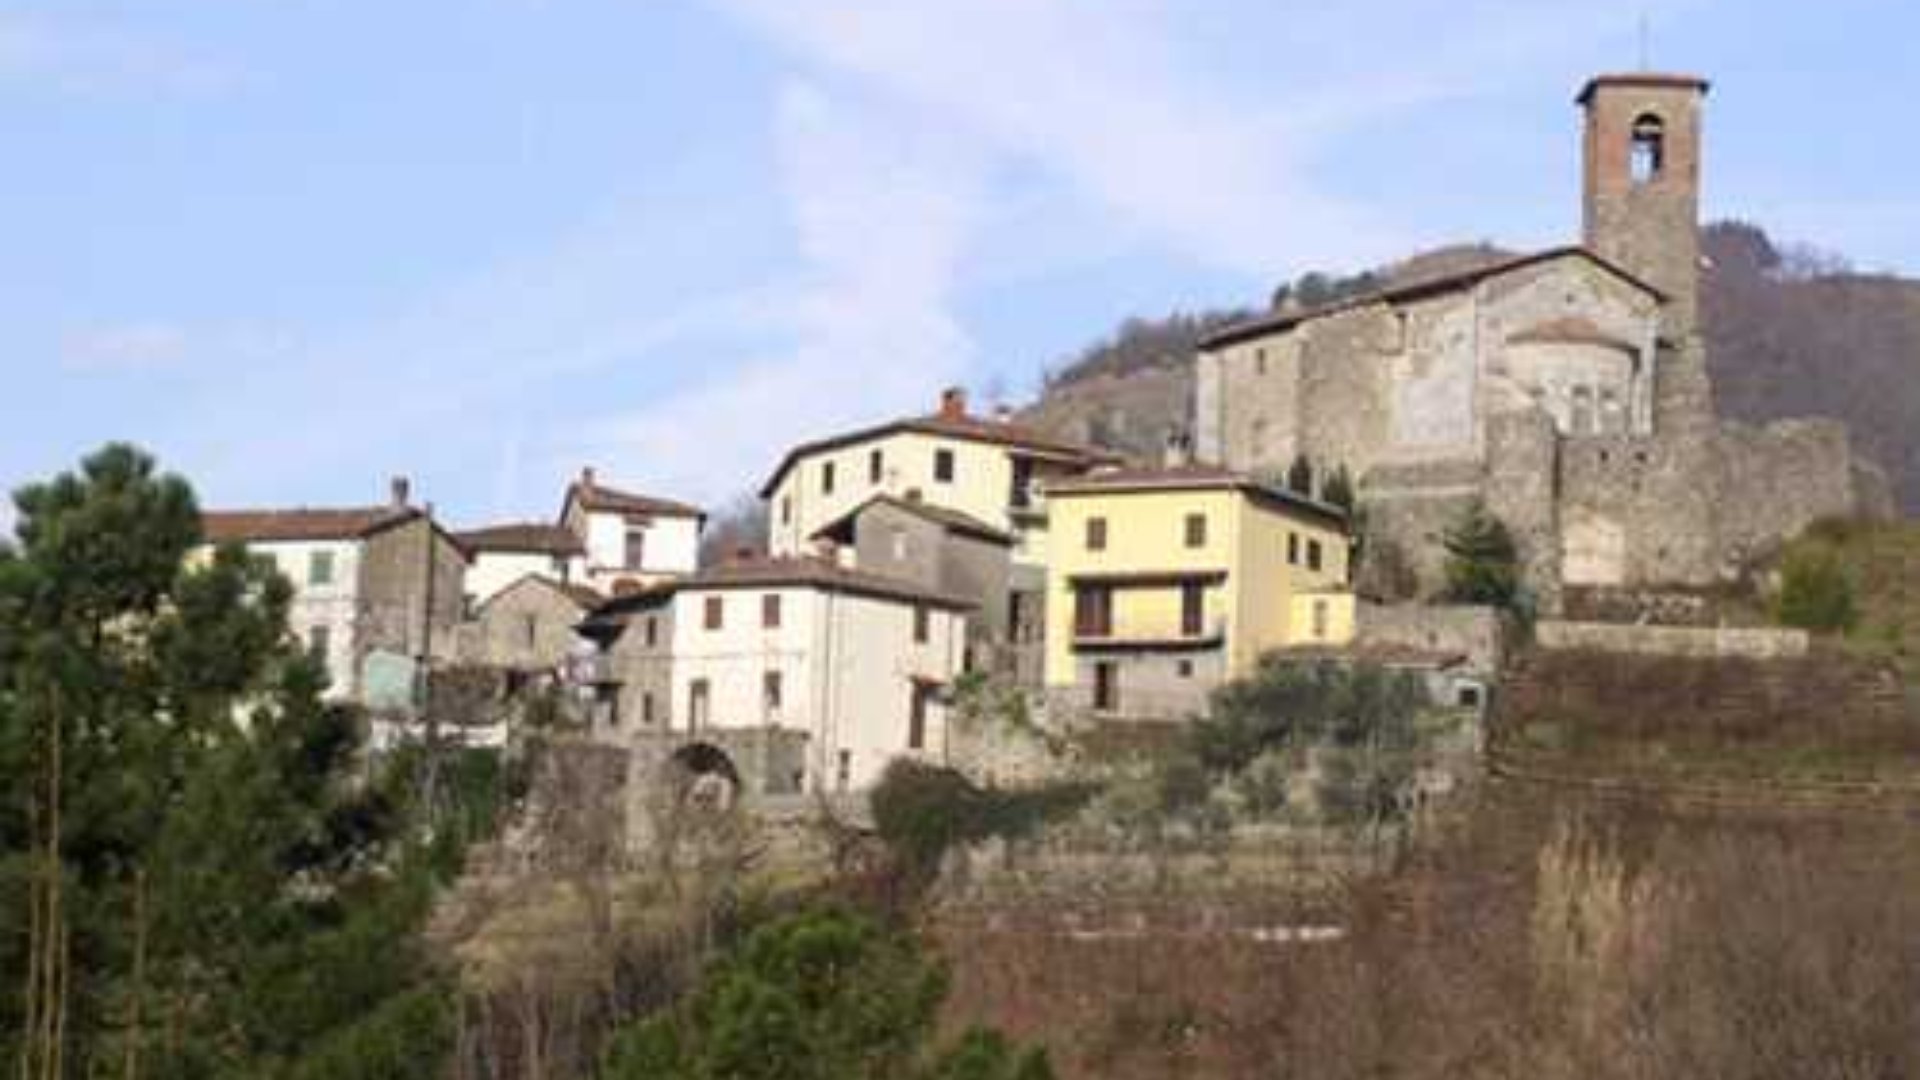 The fort of Ceserana and Fosciandora